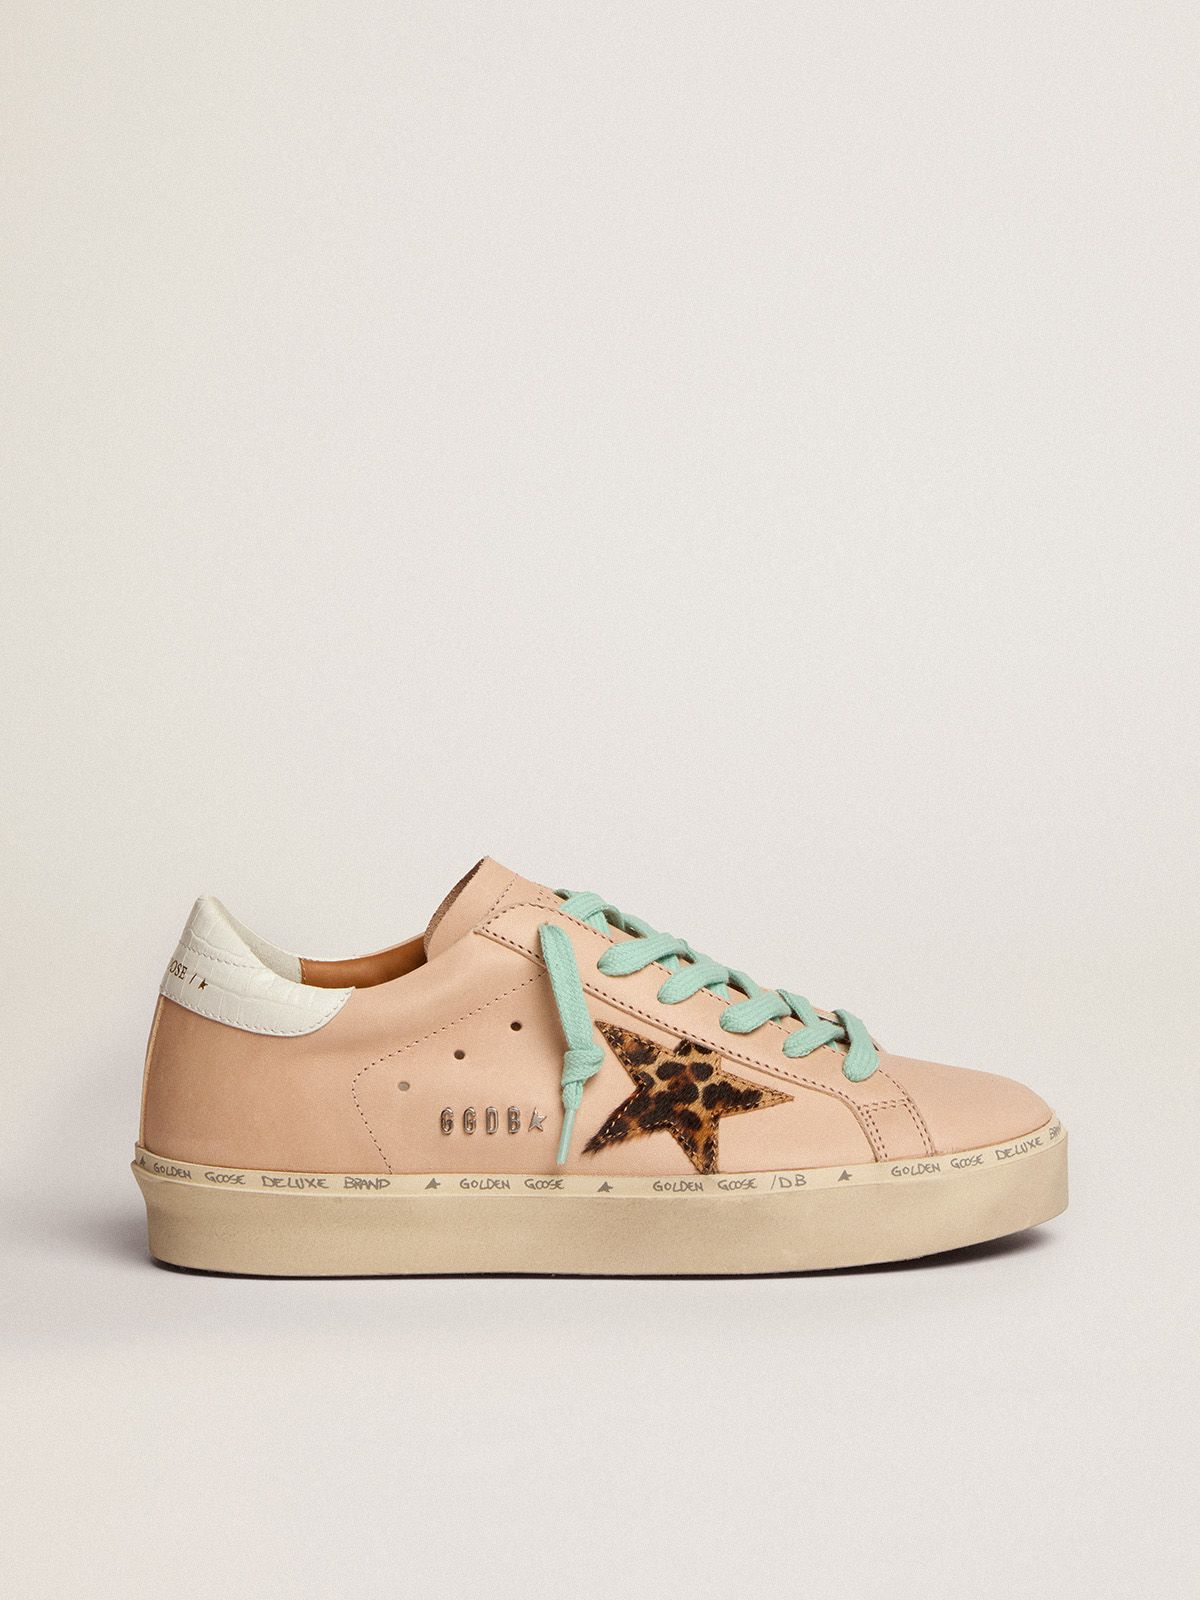 Hi Star sneakers with leopard-print pony skin star and white crocodile-print leather heel tab